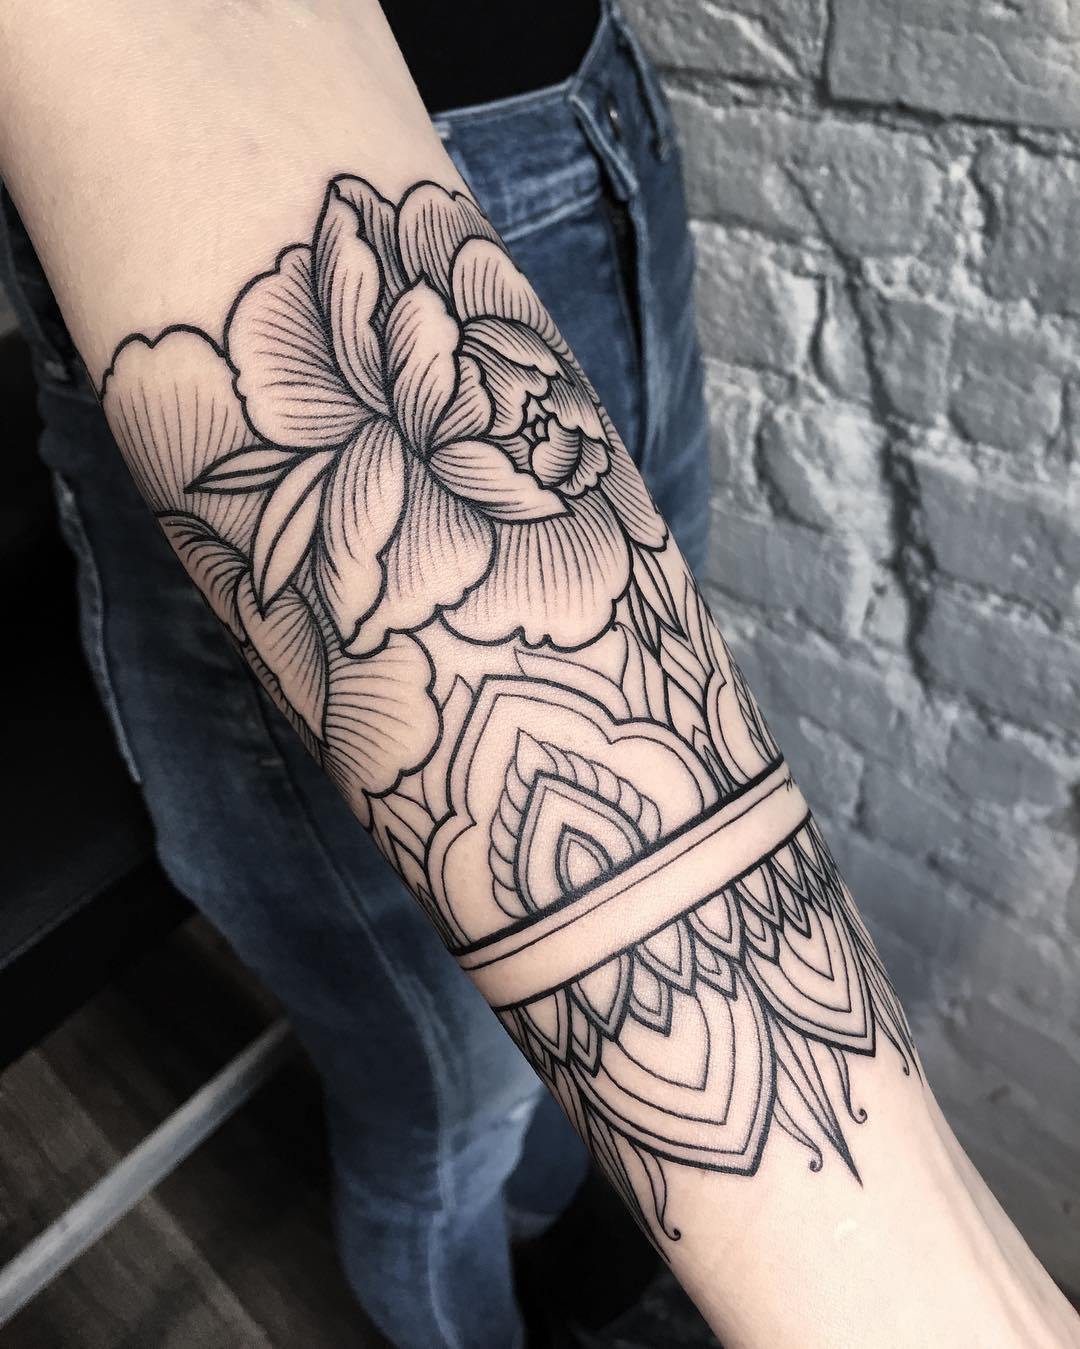 Forearm split rose tattoo by sashatattooing